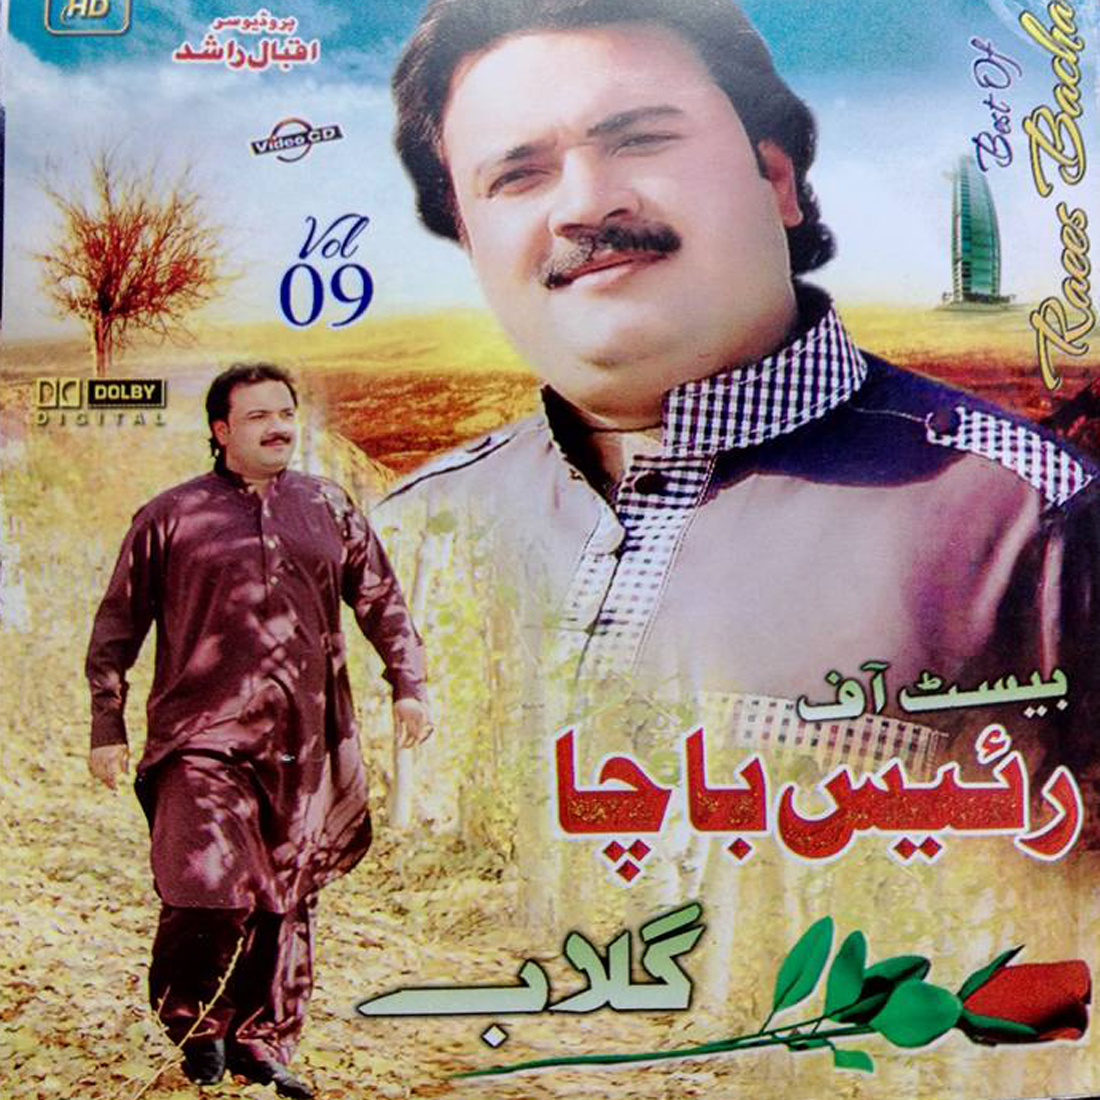 Pashto mp3 music download